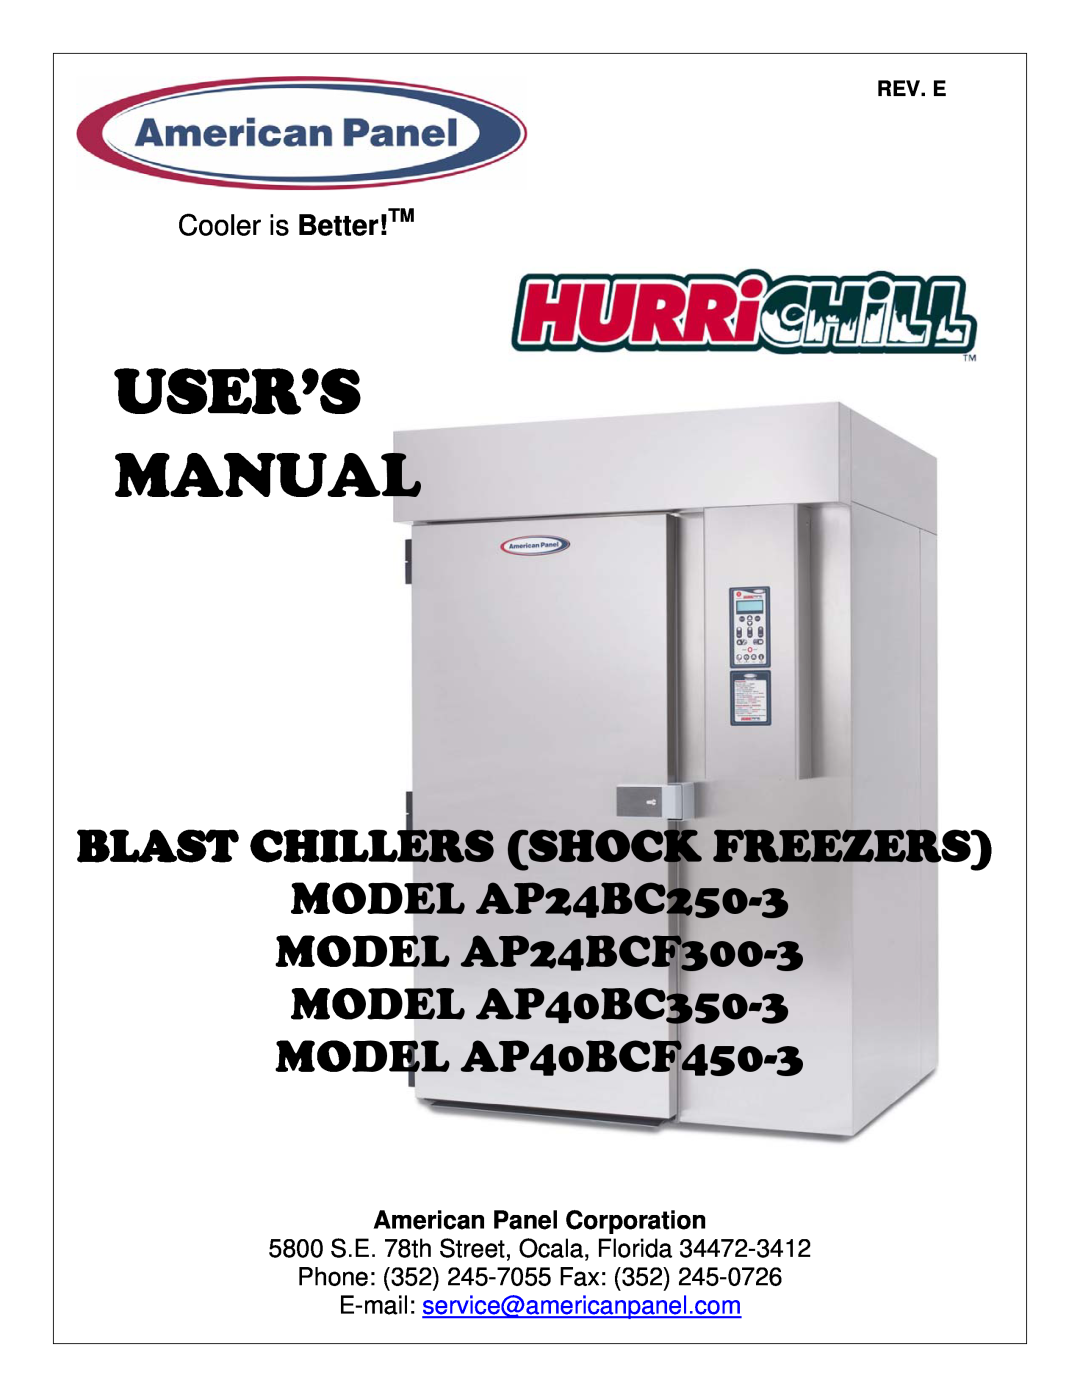 American Panel AP24BC250-3 user manual American Panel Corporation, Rev. E, User’S Manual, Cooler is Better!TM 